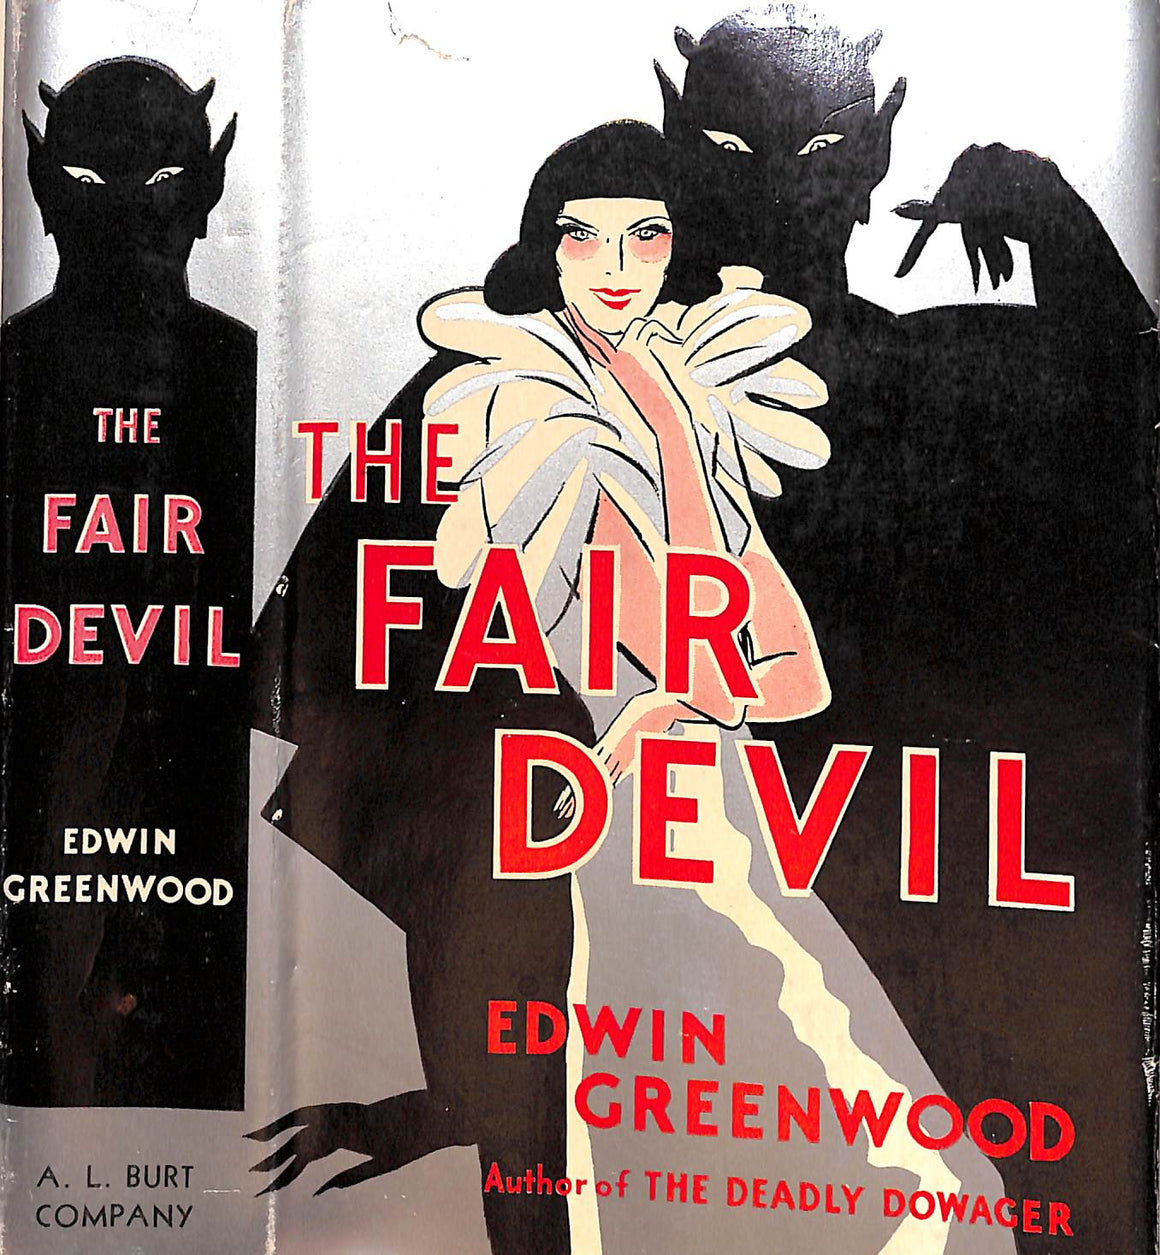 "The Fair Devil" 1931 GREENWOOD, Edwin